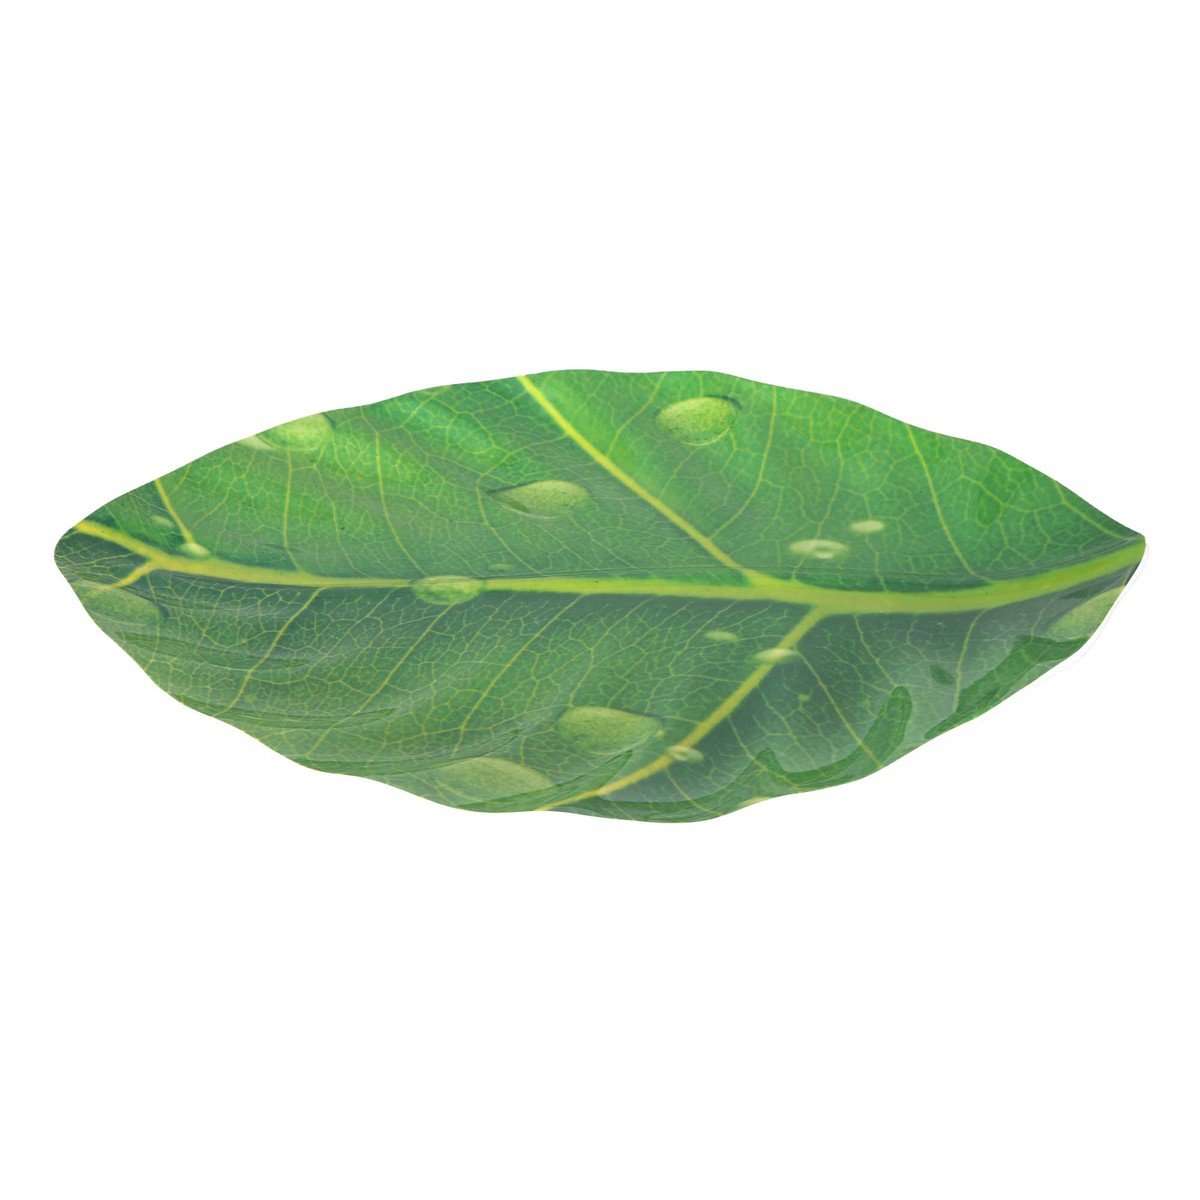 LuLu Melamine Tray Leaf Shape TT17157 15.75in